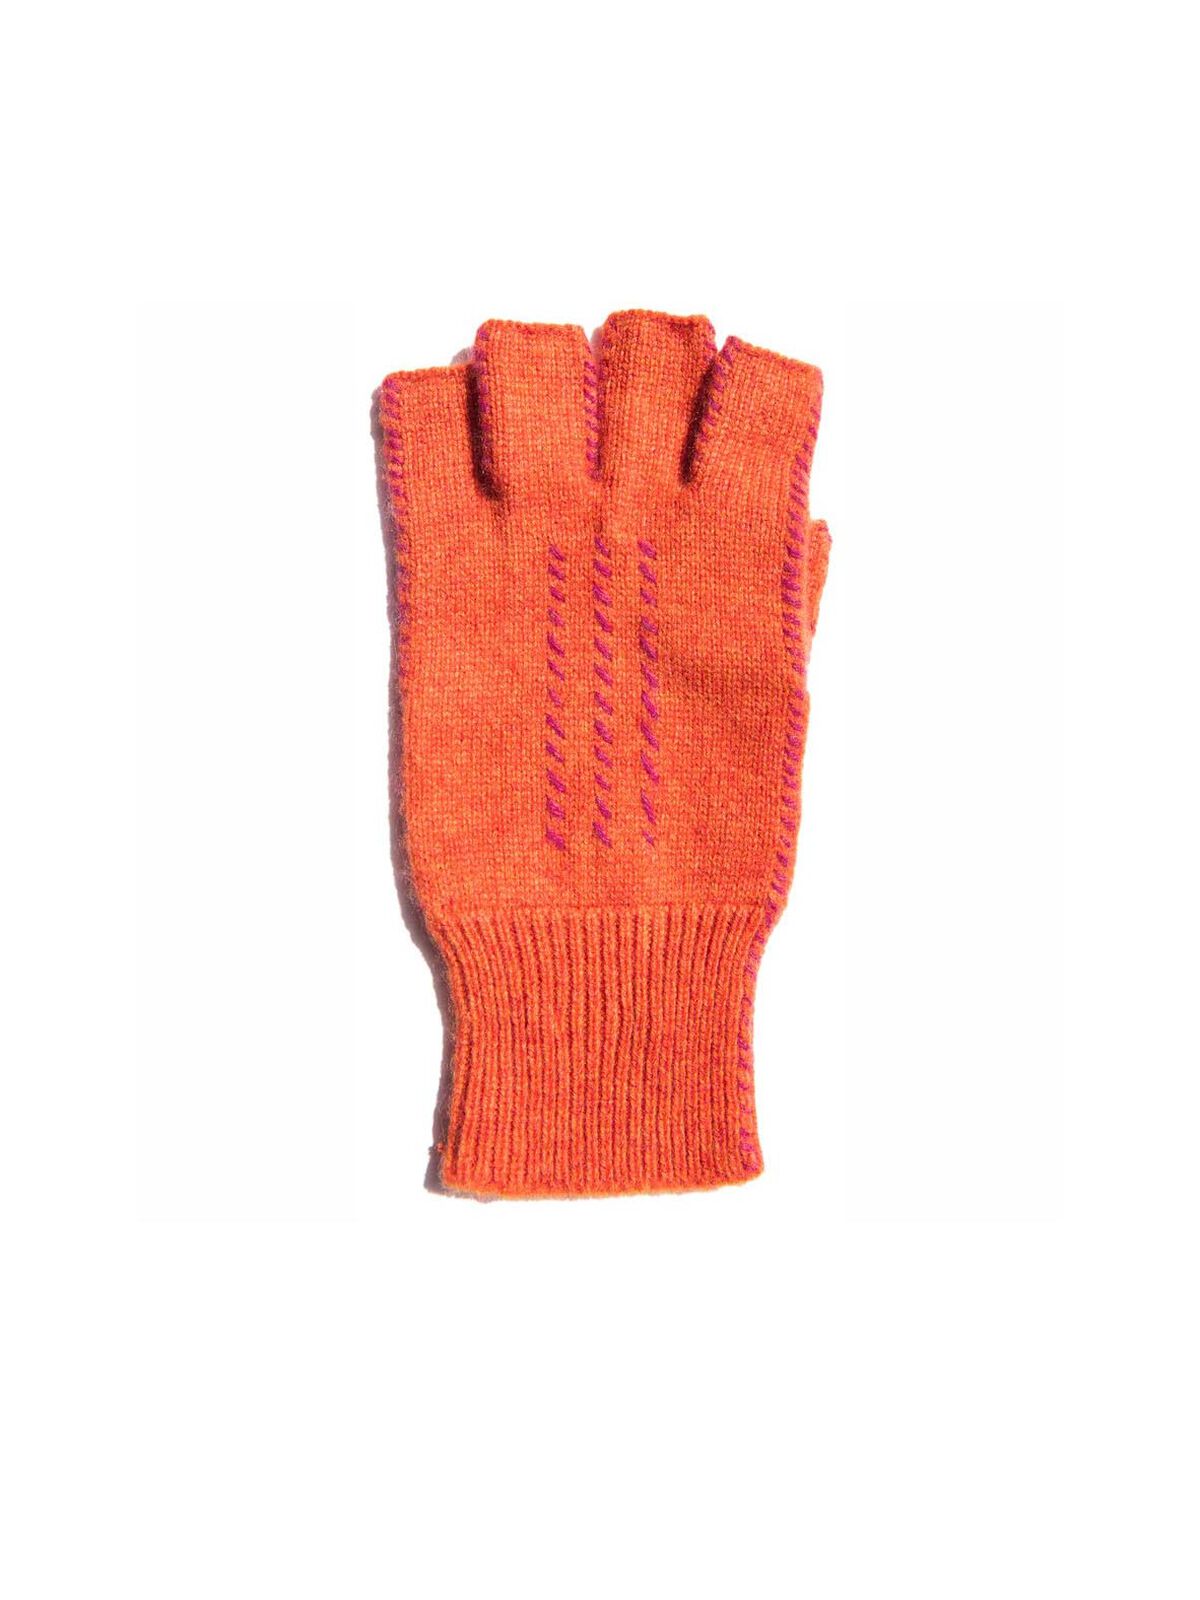 Meg Cohen - Cashmere Fingerless Stitch Gloves